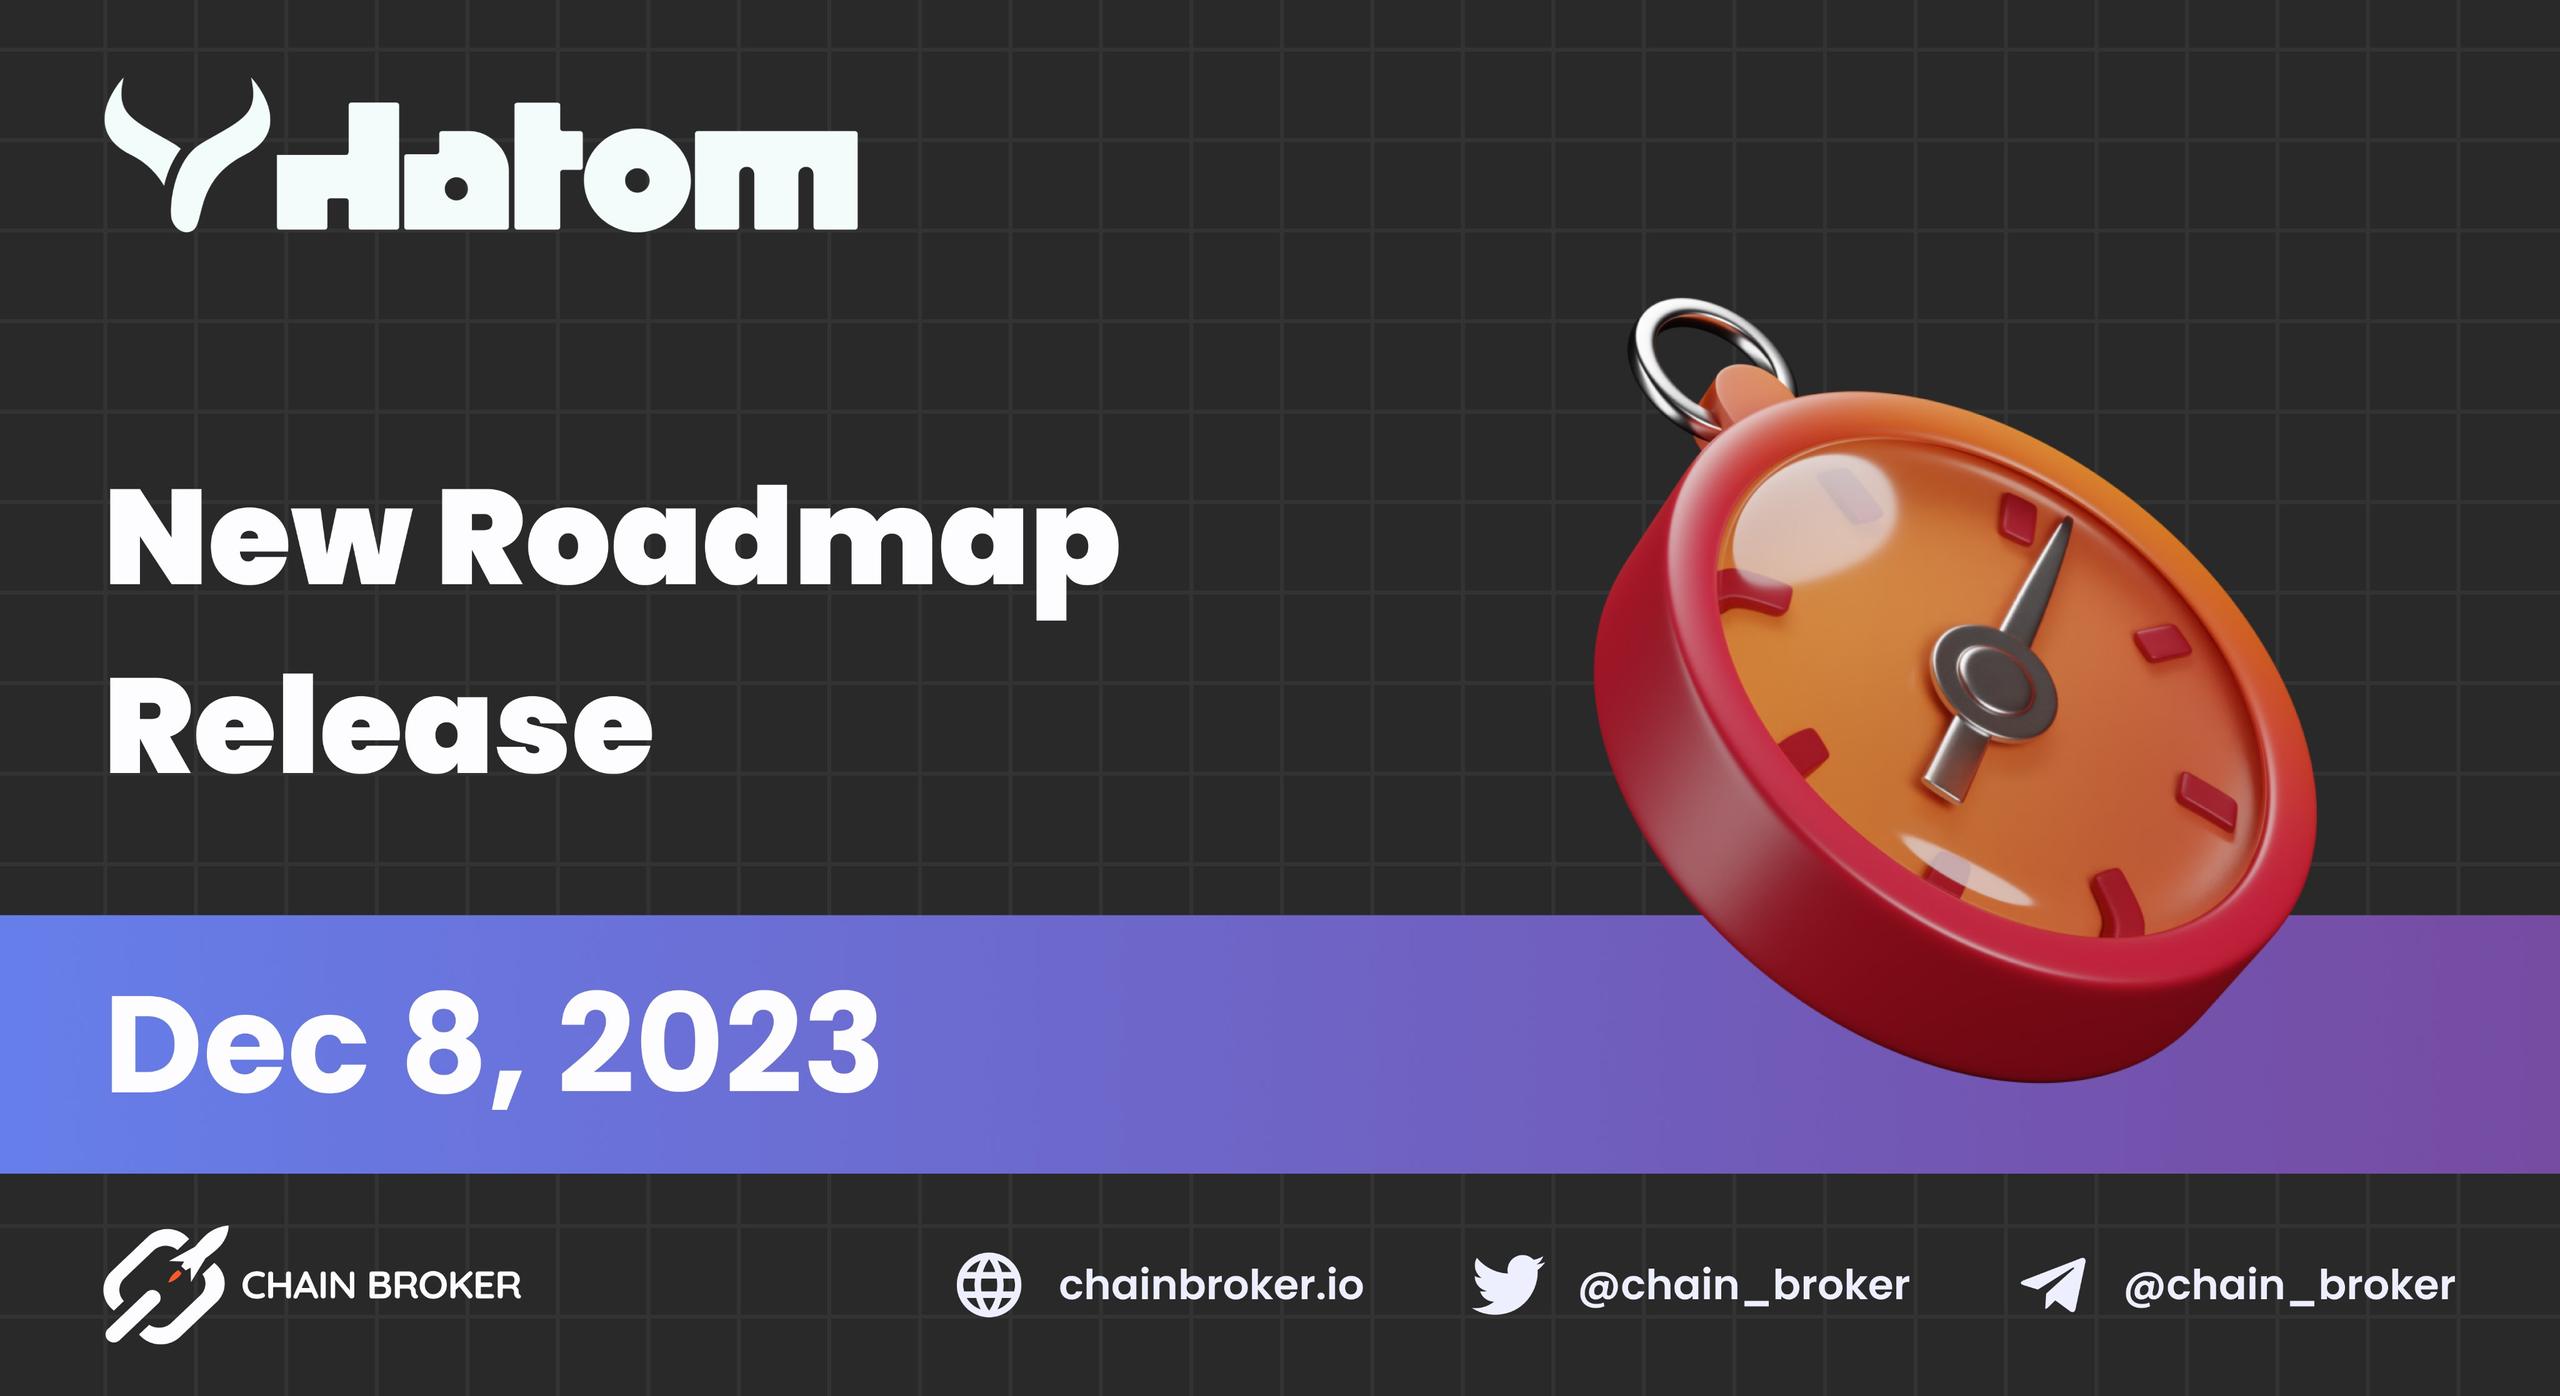 Hatom has released its updated Roadmap